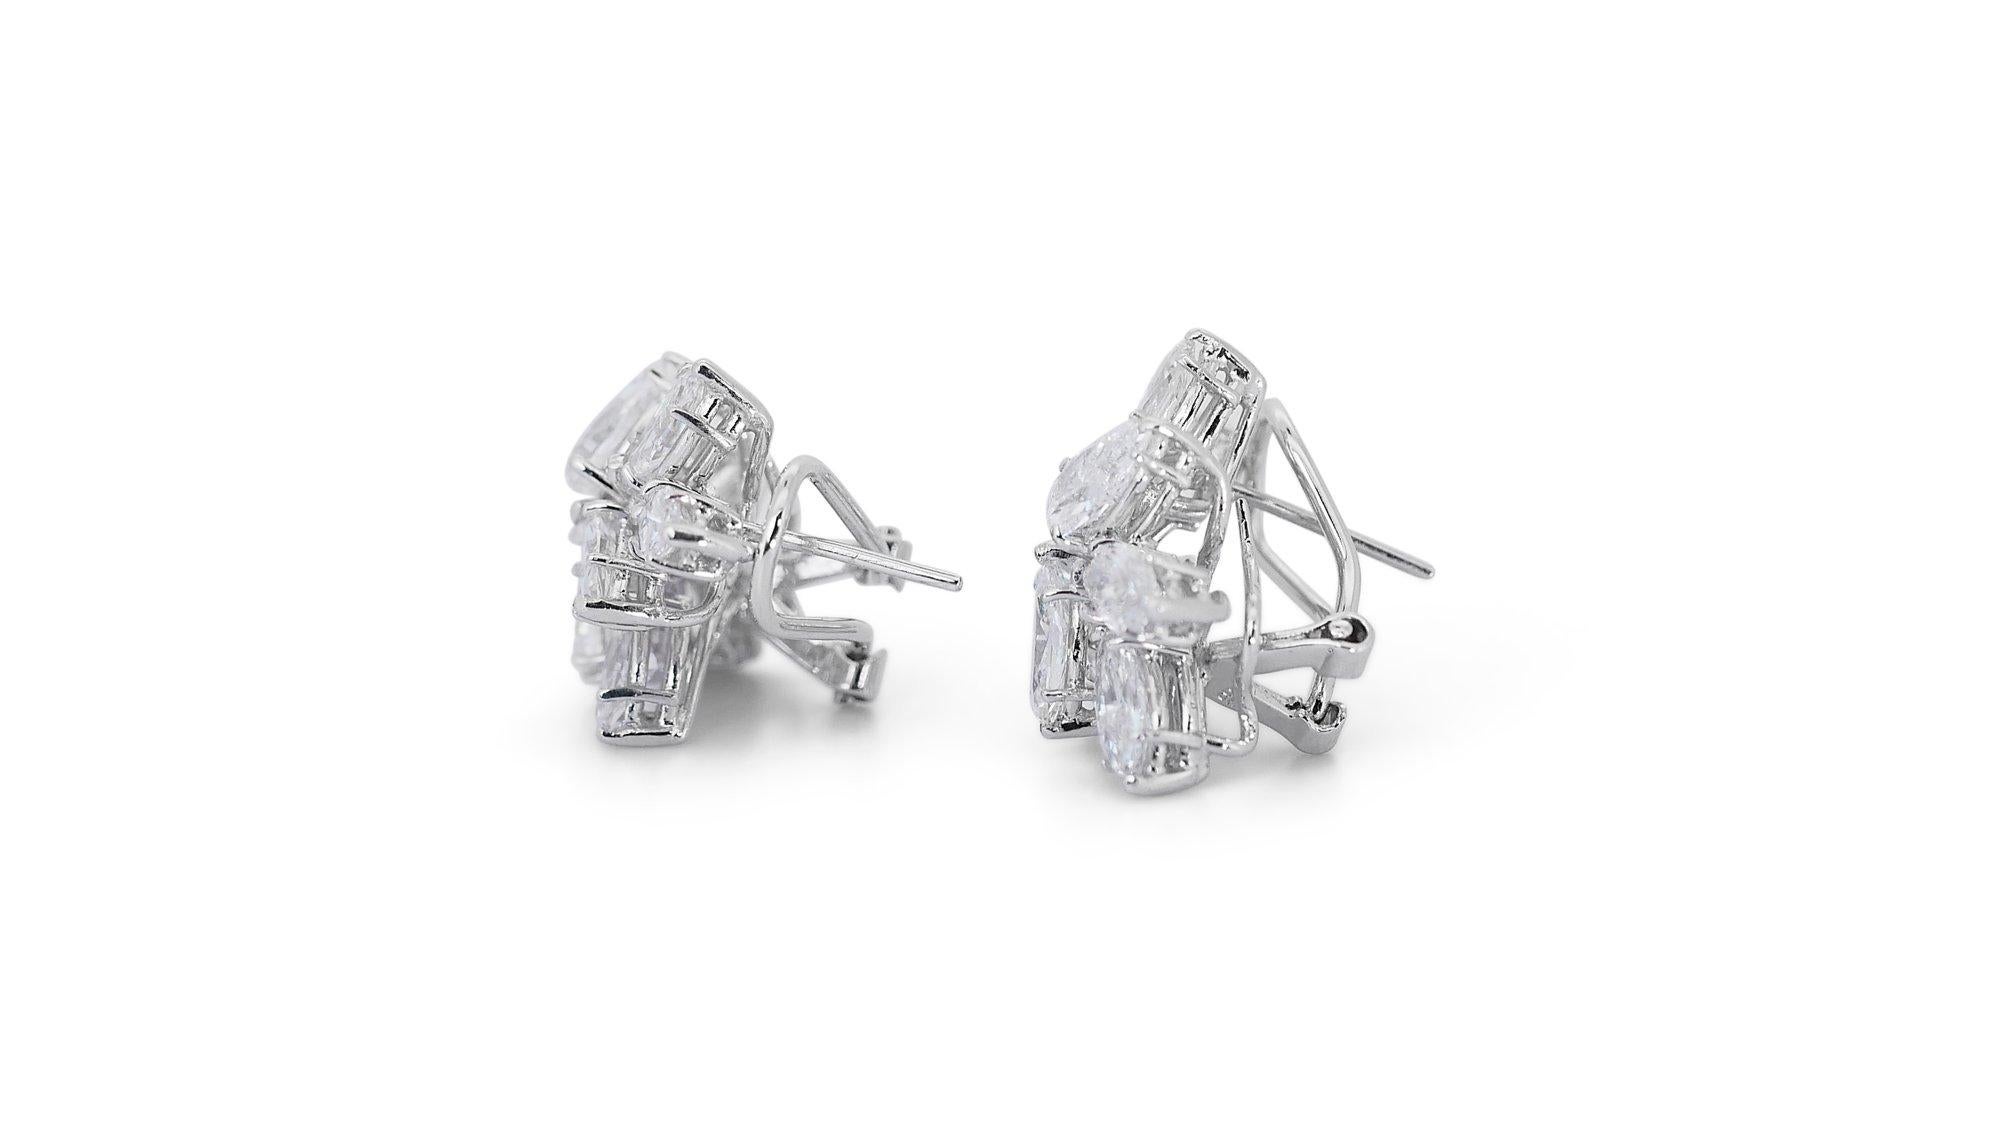 18 kt. White Gold Diamond Earrings with 6 ct Total Natural Diamonds - IGI Cert 2